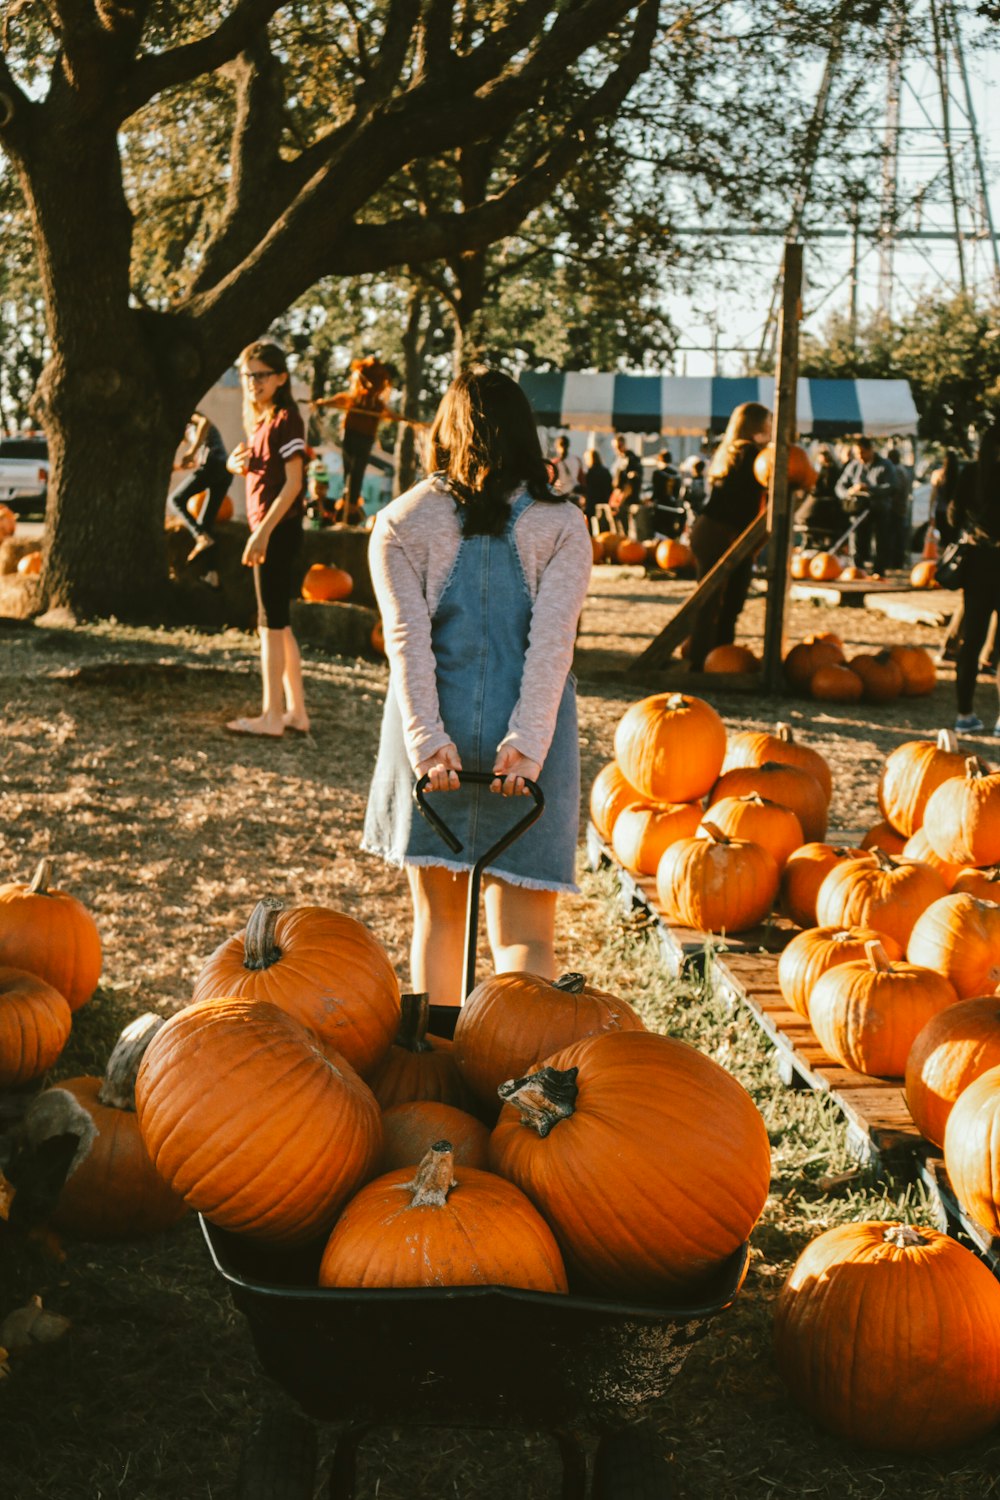 woman pulling wagon with pumpkins 
Kylie Paz
@kyliepreston